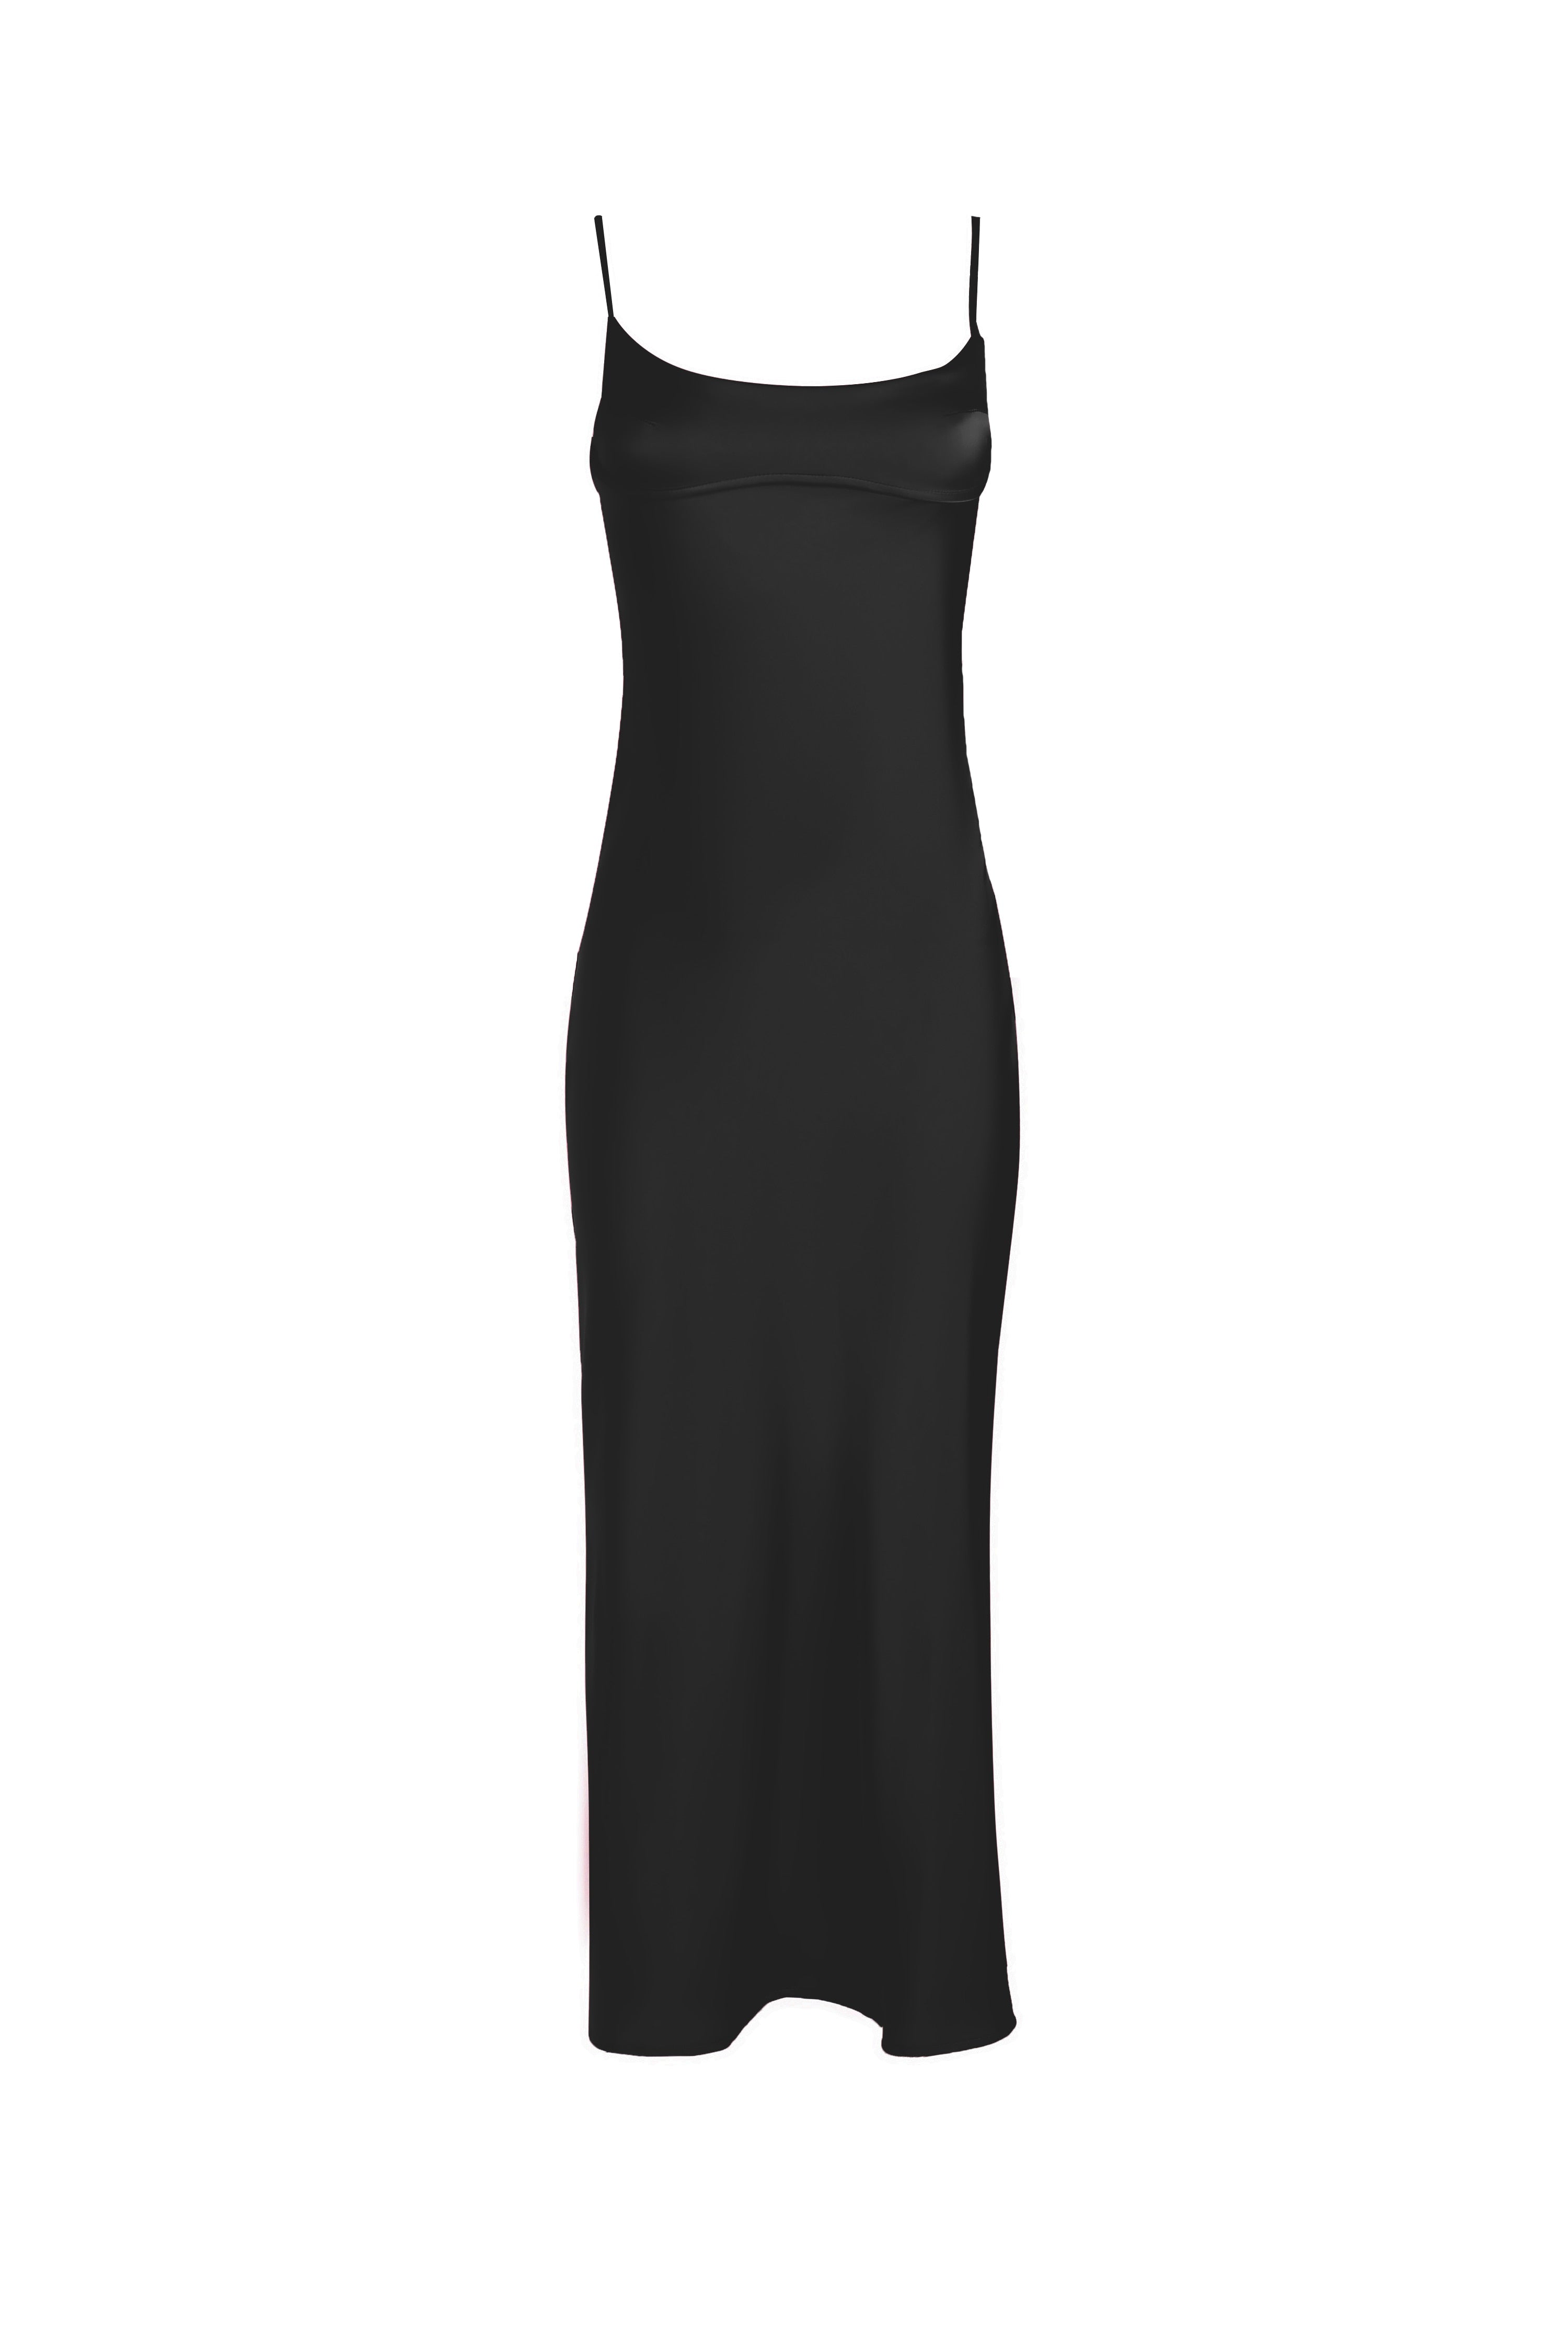 VestiVogue Camis Satin Long Dress VestiVogue Black XS